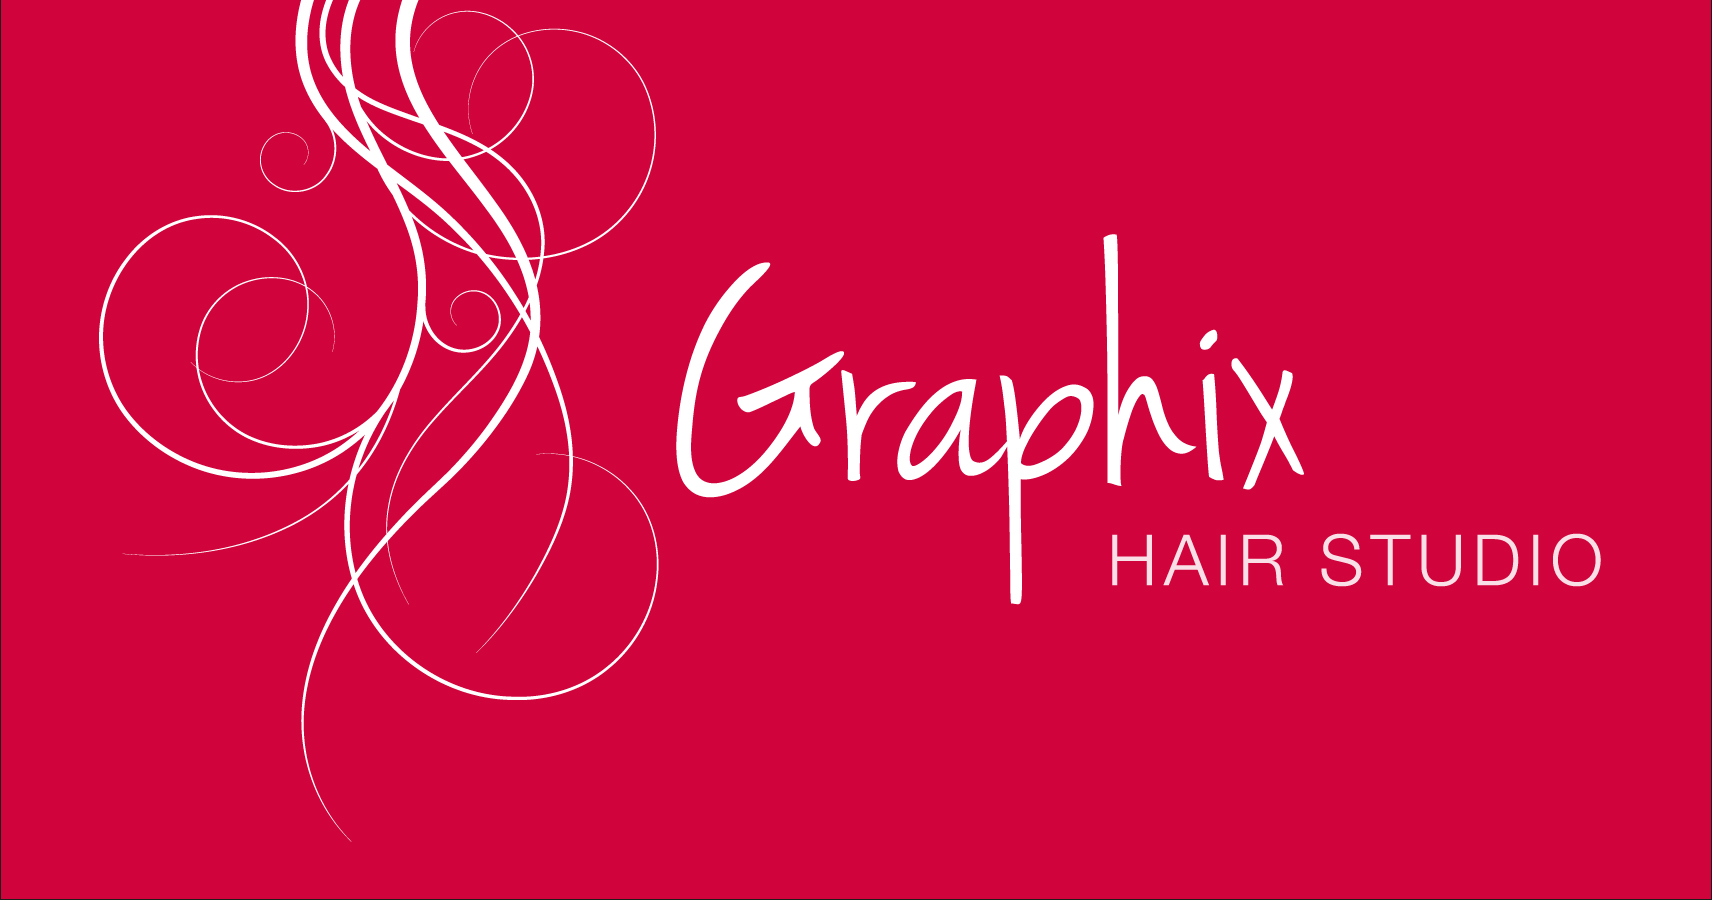 Graphix Hair Studio